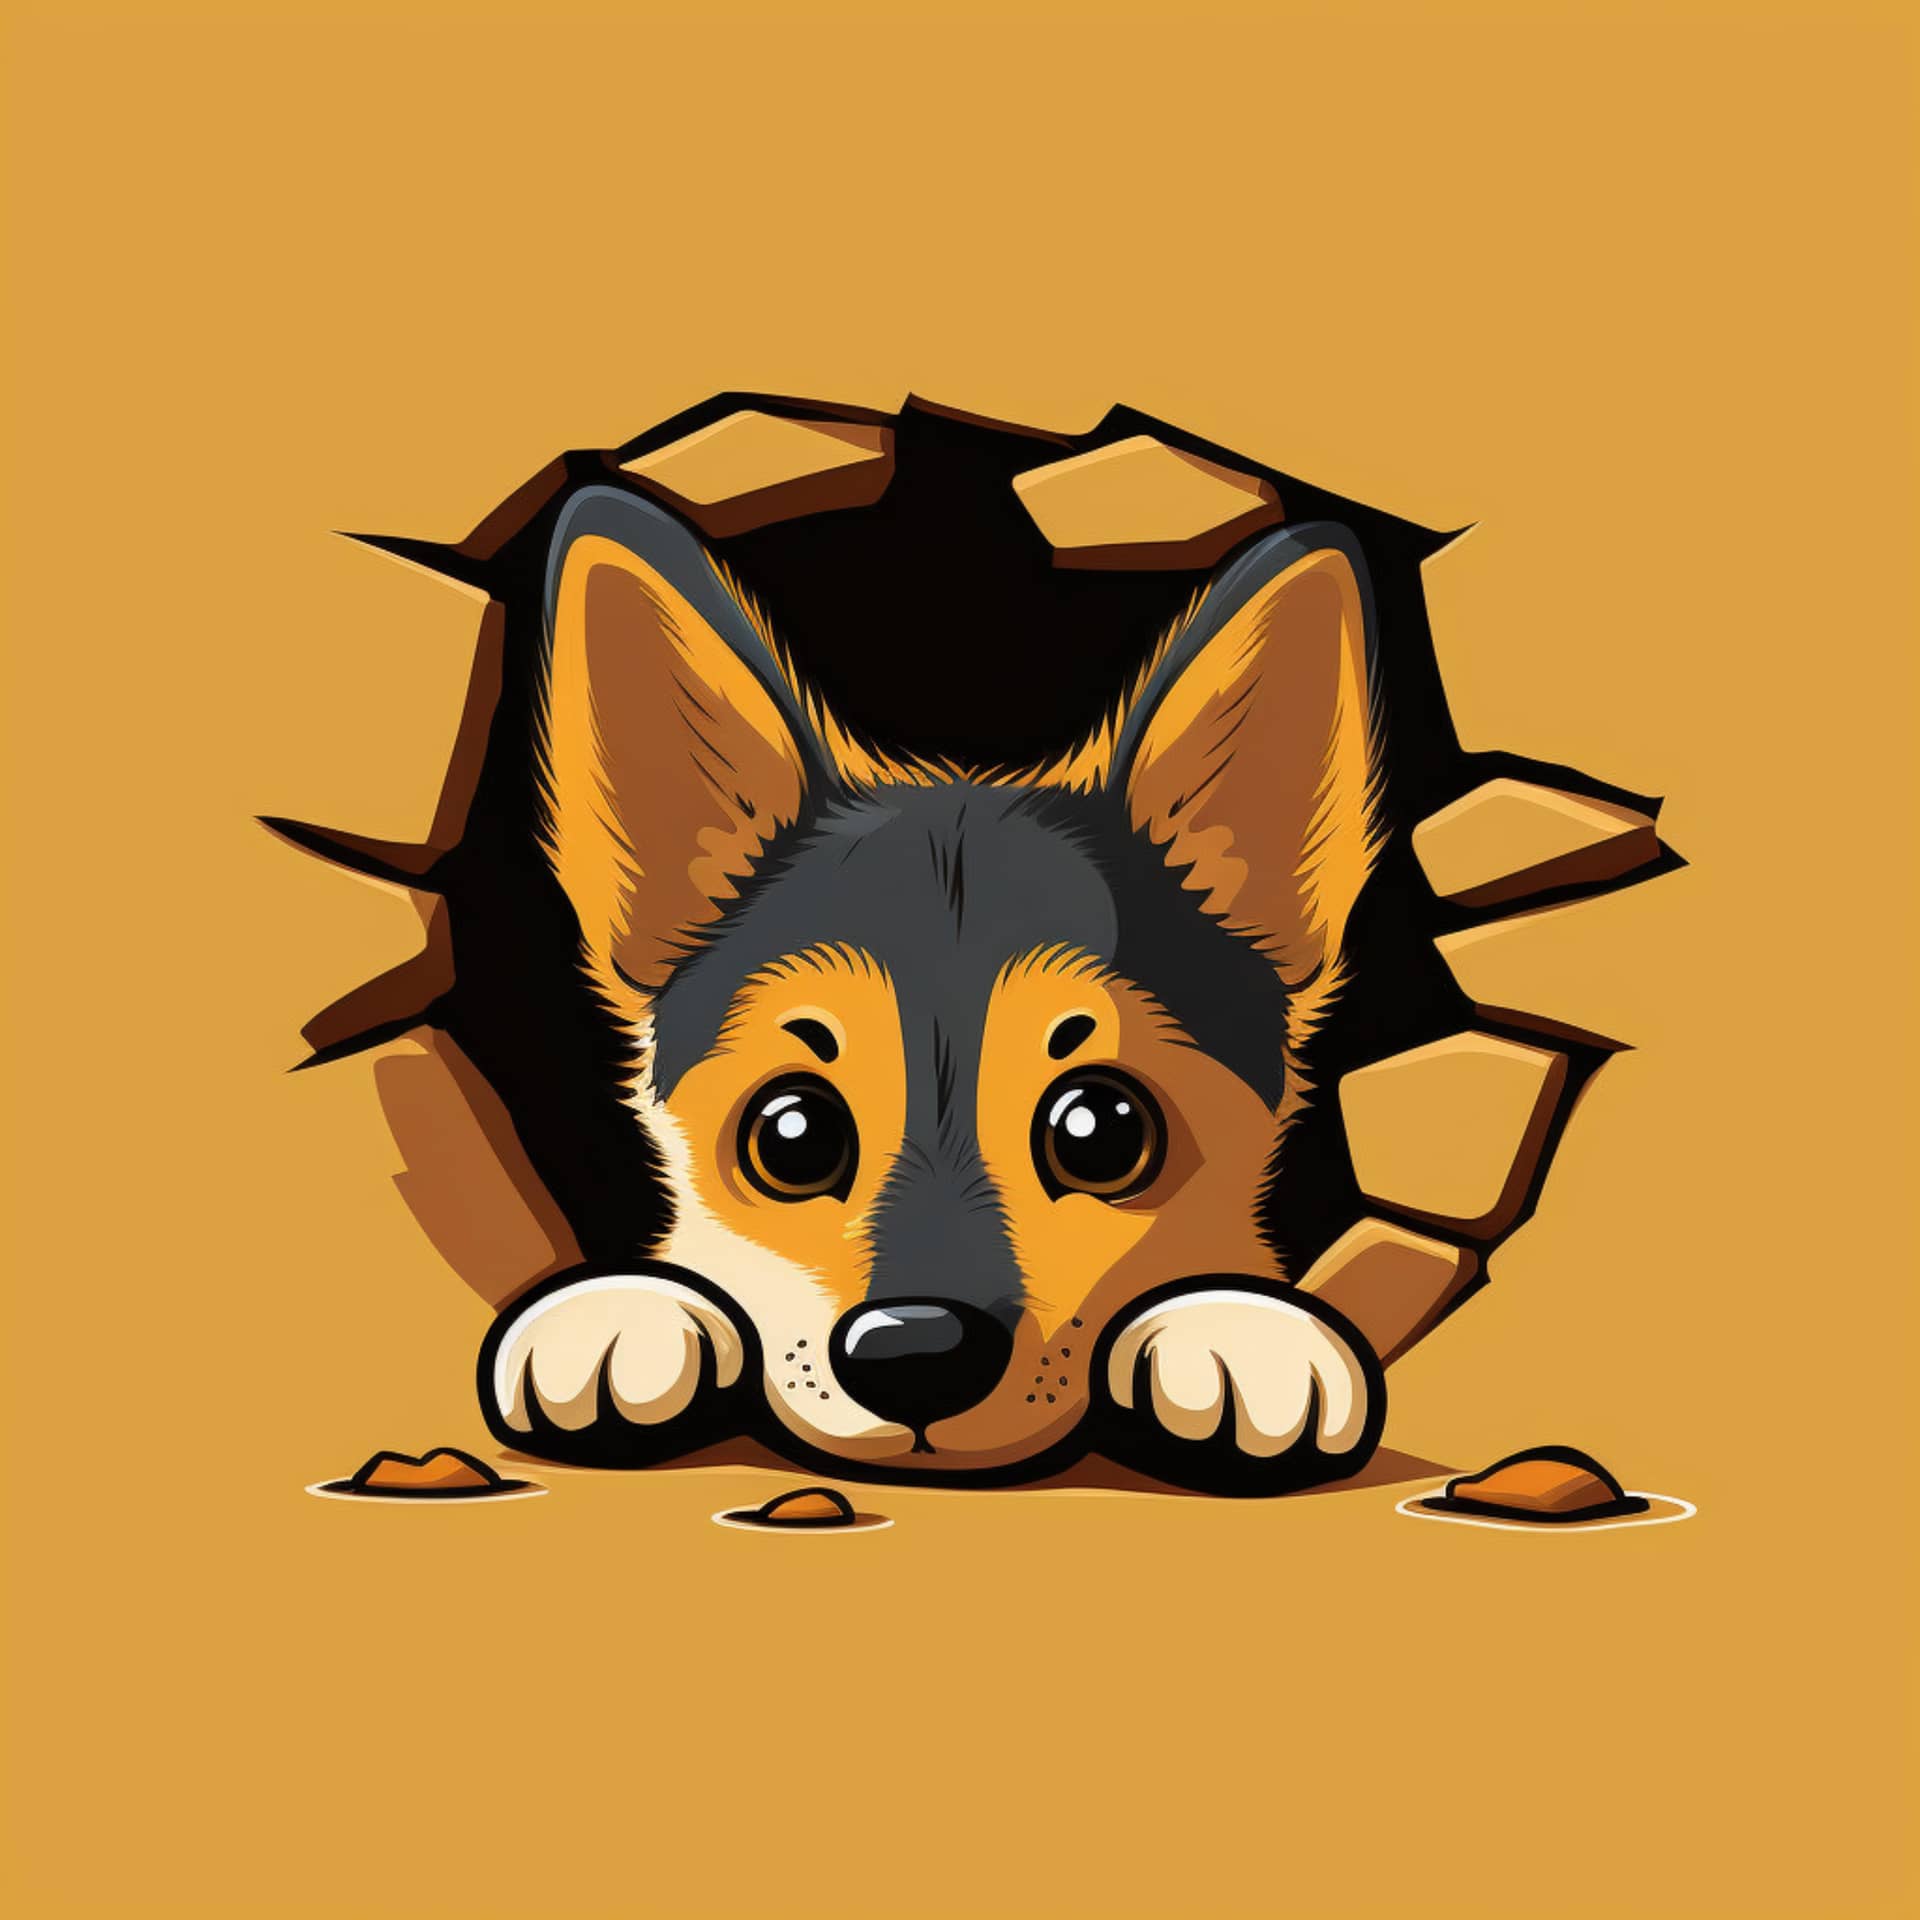 Cute dog cartoon icon illustration expressive image